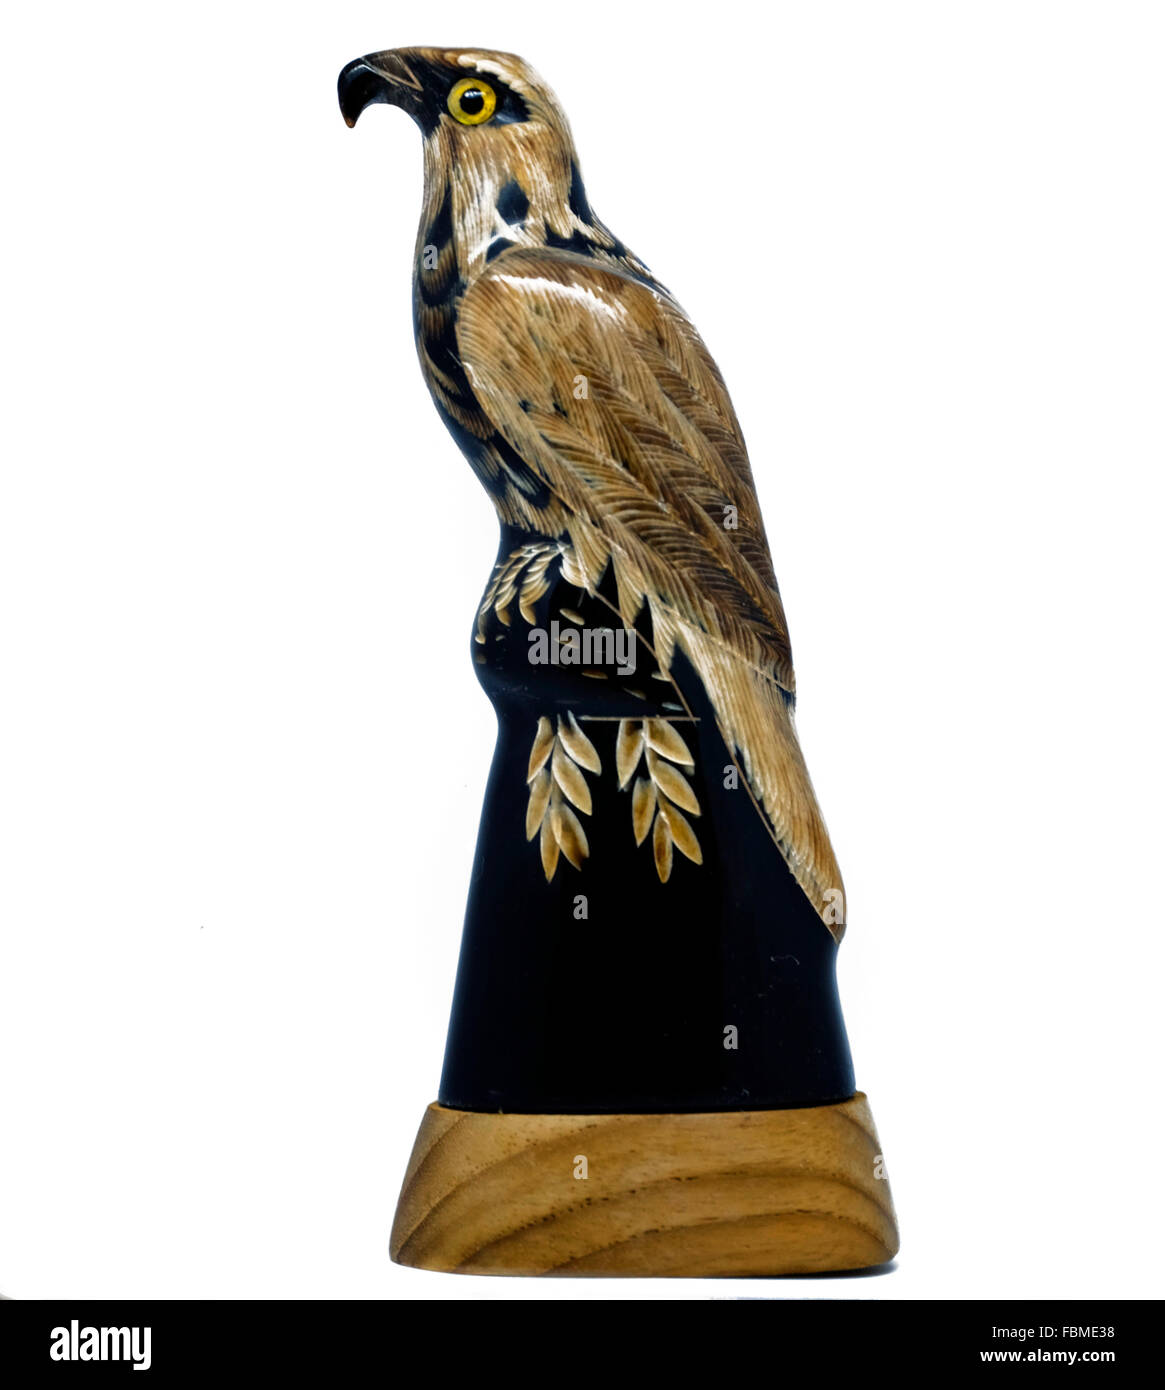 Horn Bald Eagle figurine from the USA U.S.A. United States America Stock Photo